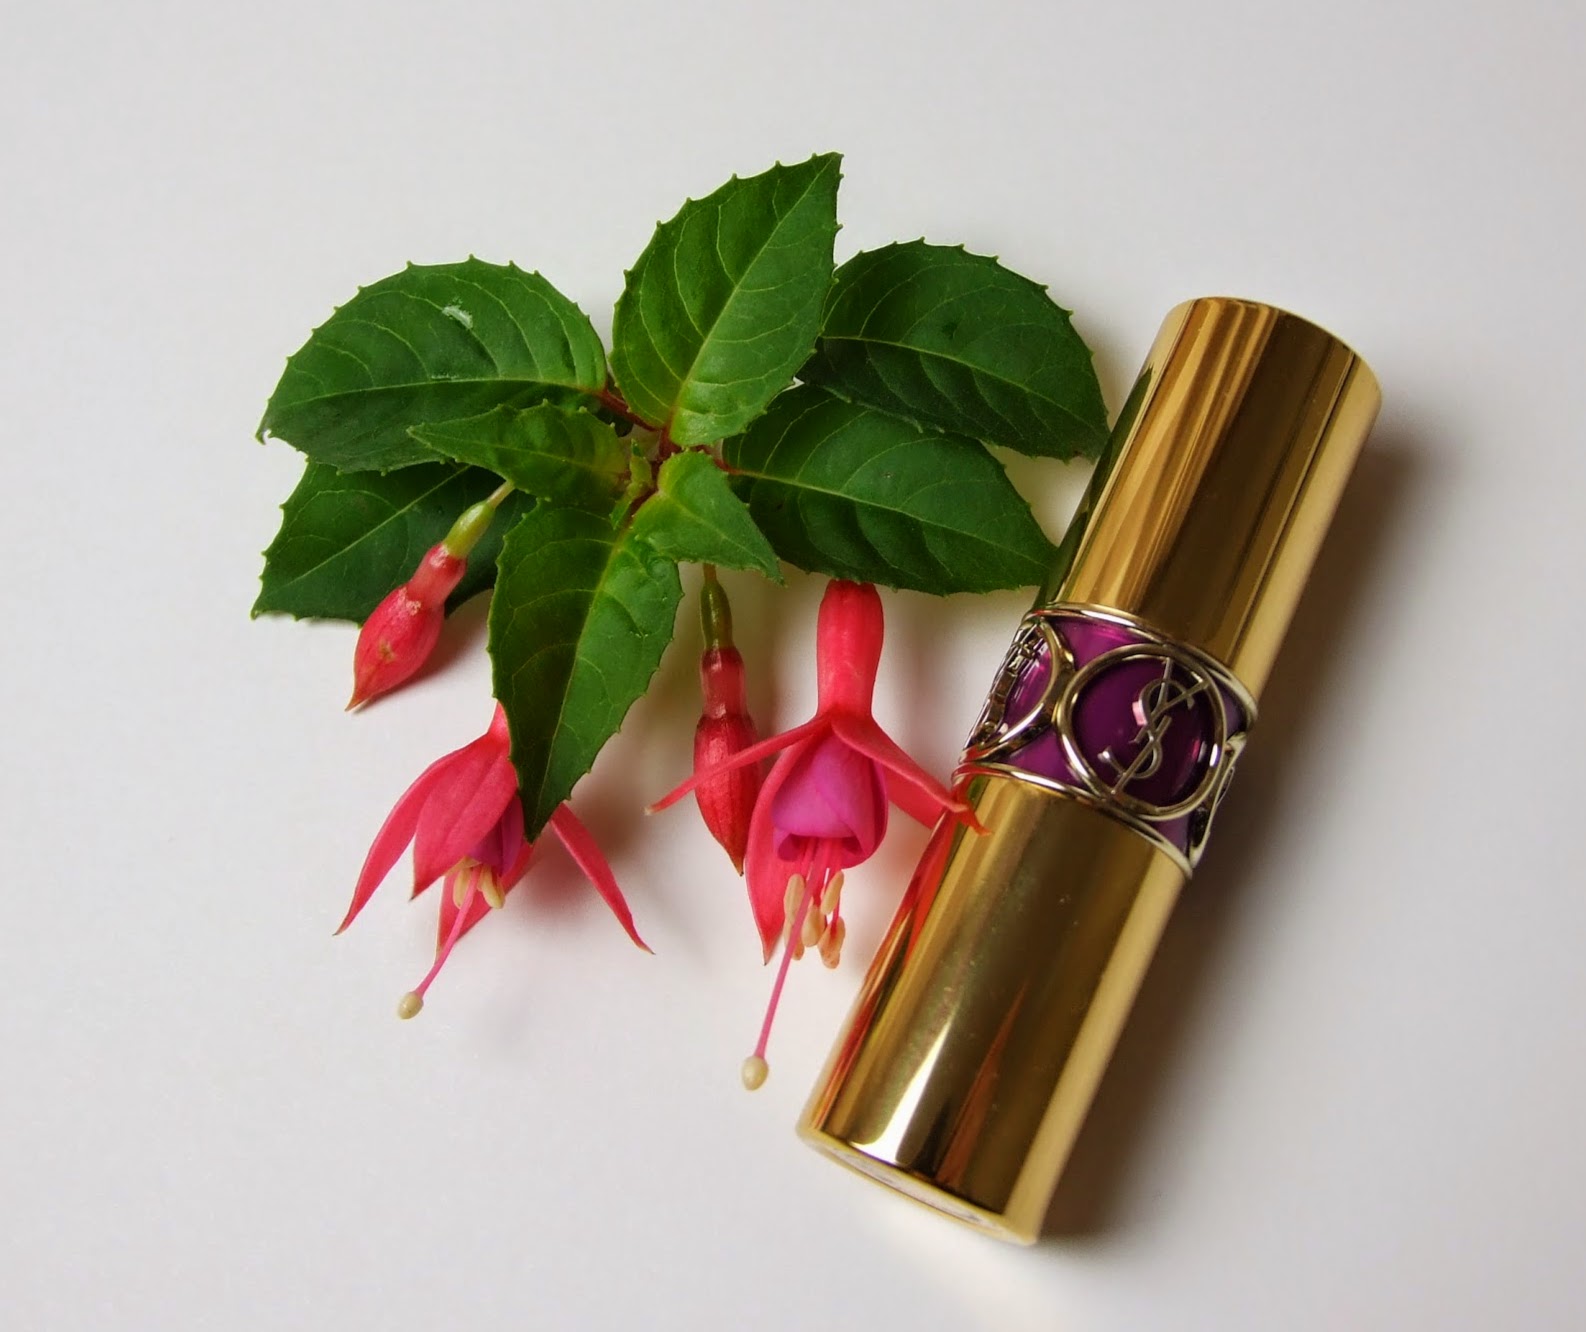 YSL Rouge volupte shine lipstick Fuchsia in rage No 19 beauty blog review swatch lips